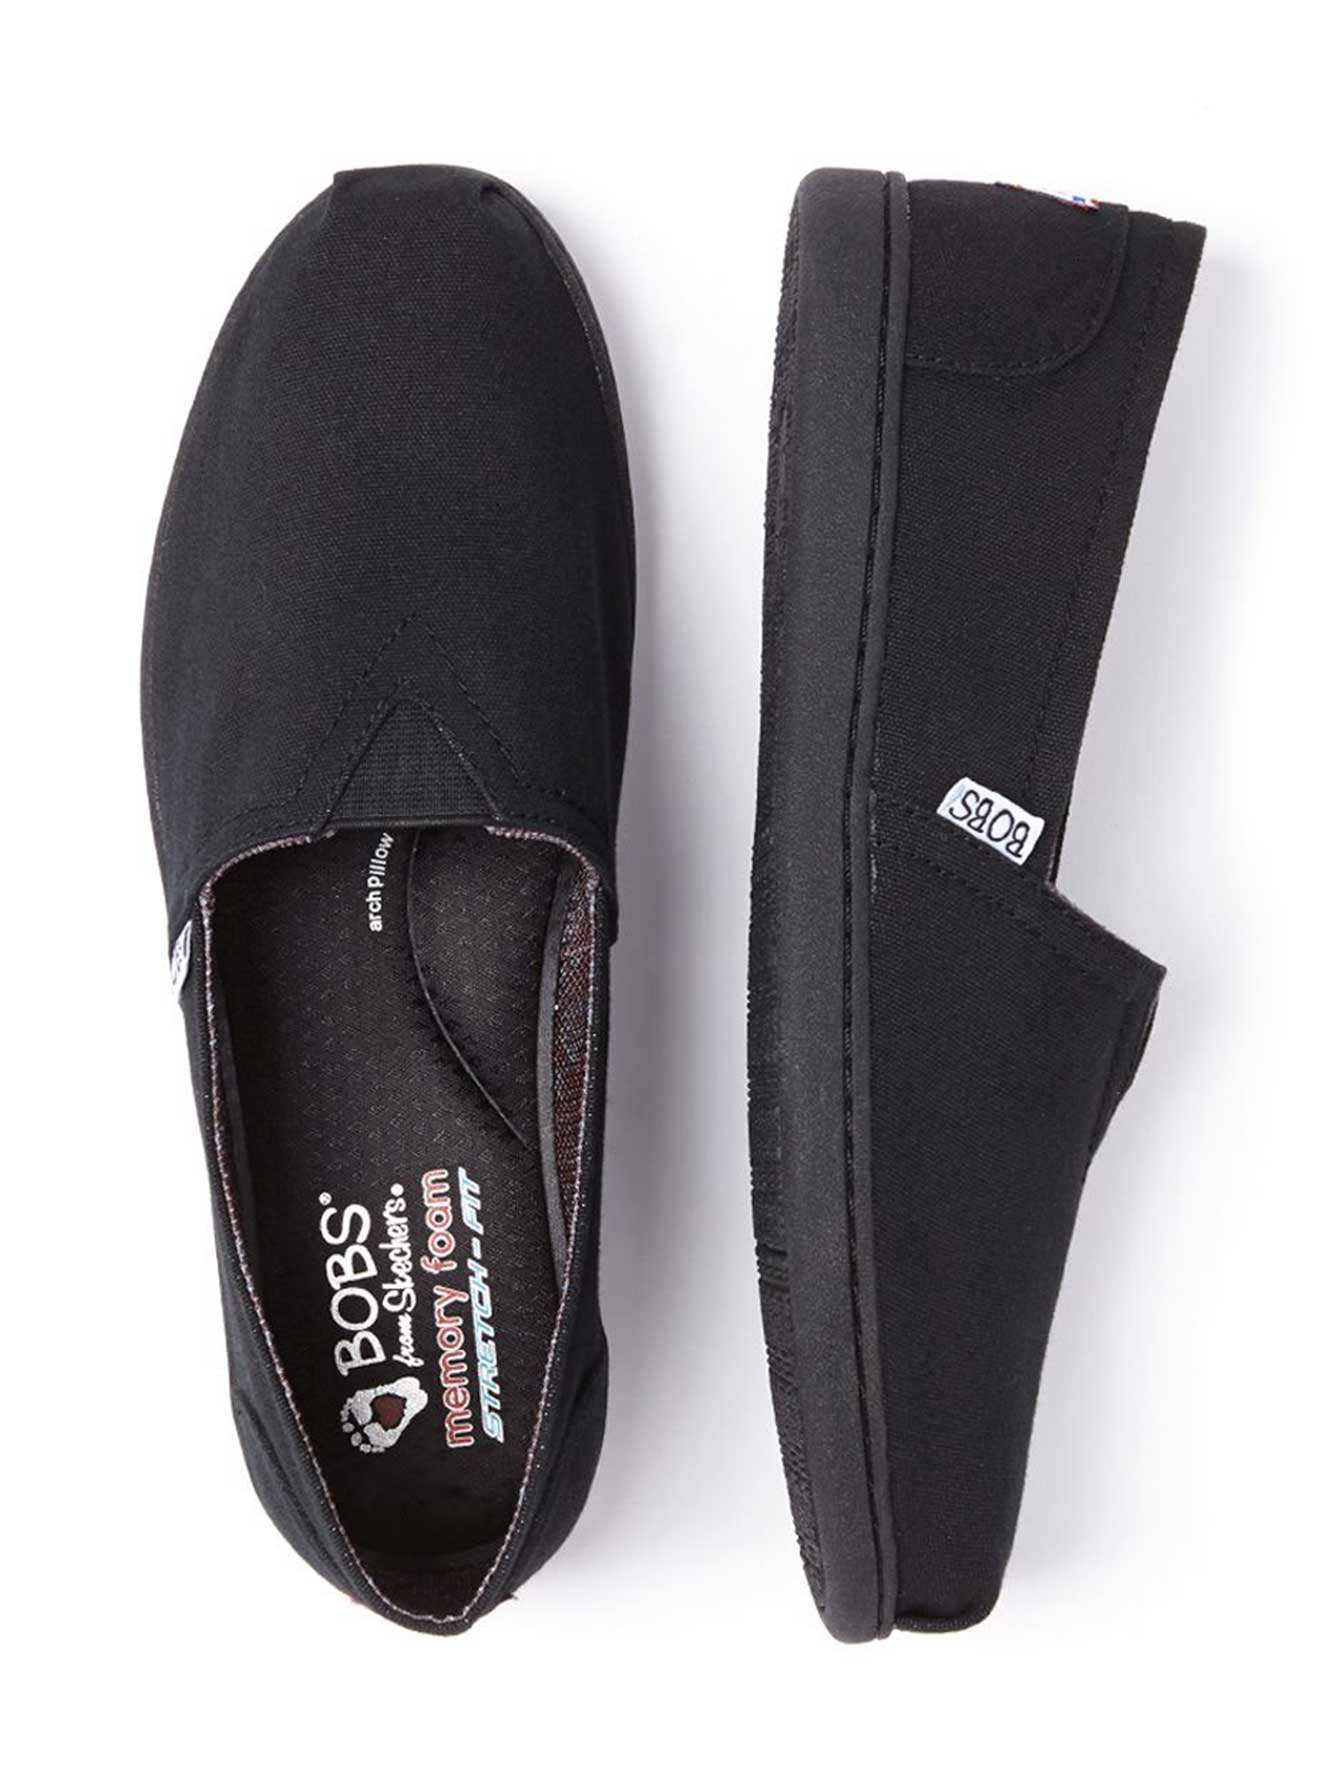 skechers slippers canada